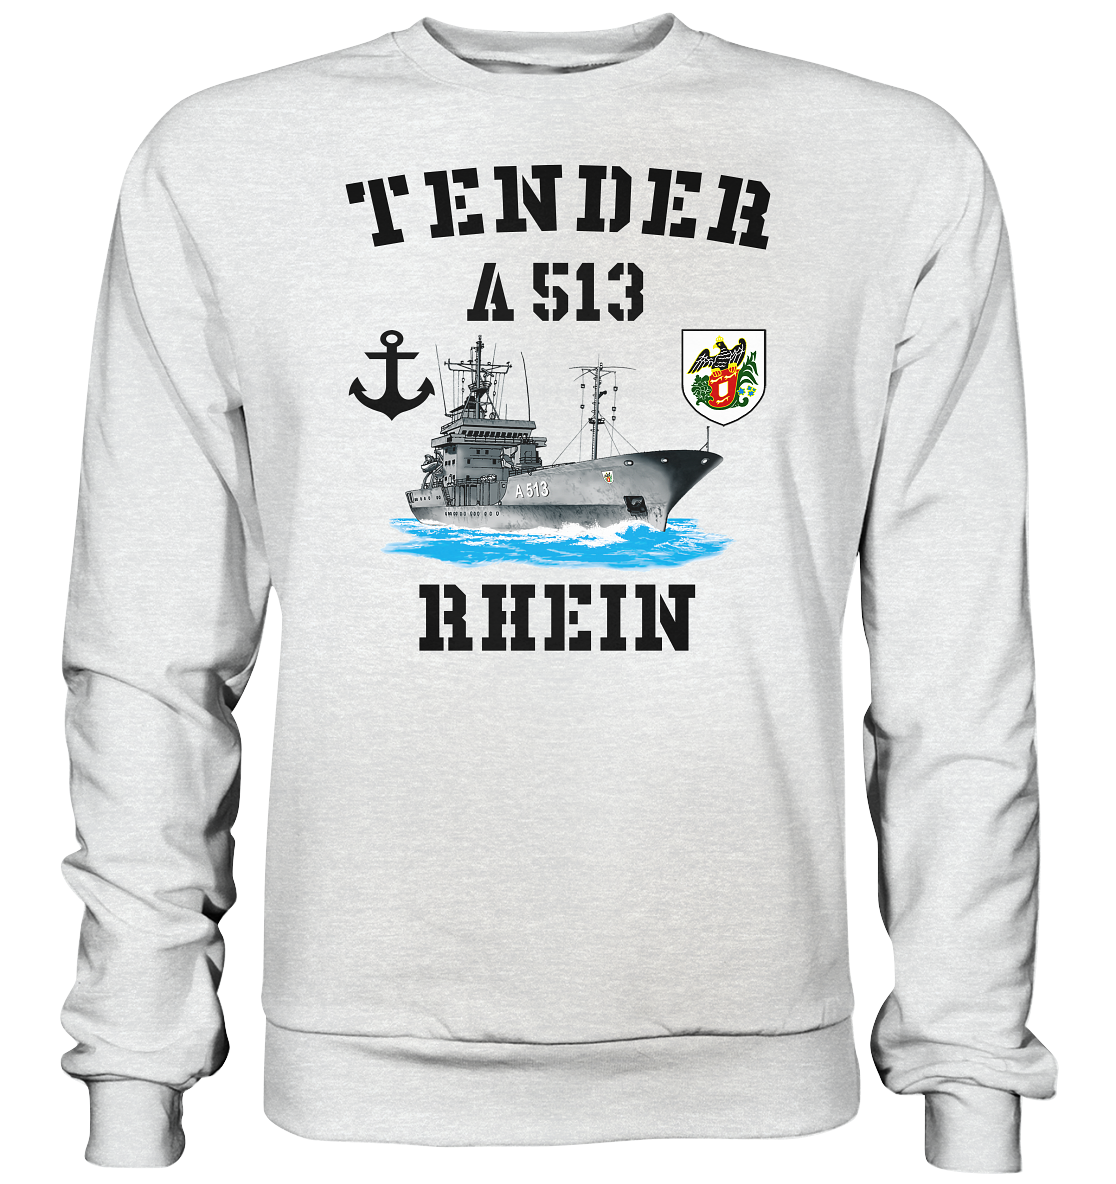 Tender A513 RHEIN Anker - Premium Sweatshirt